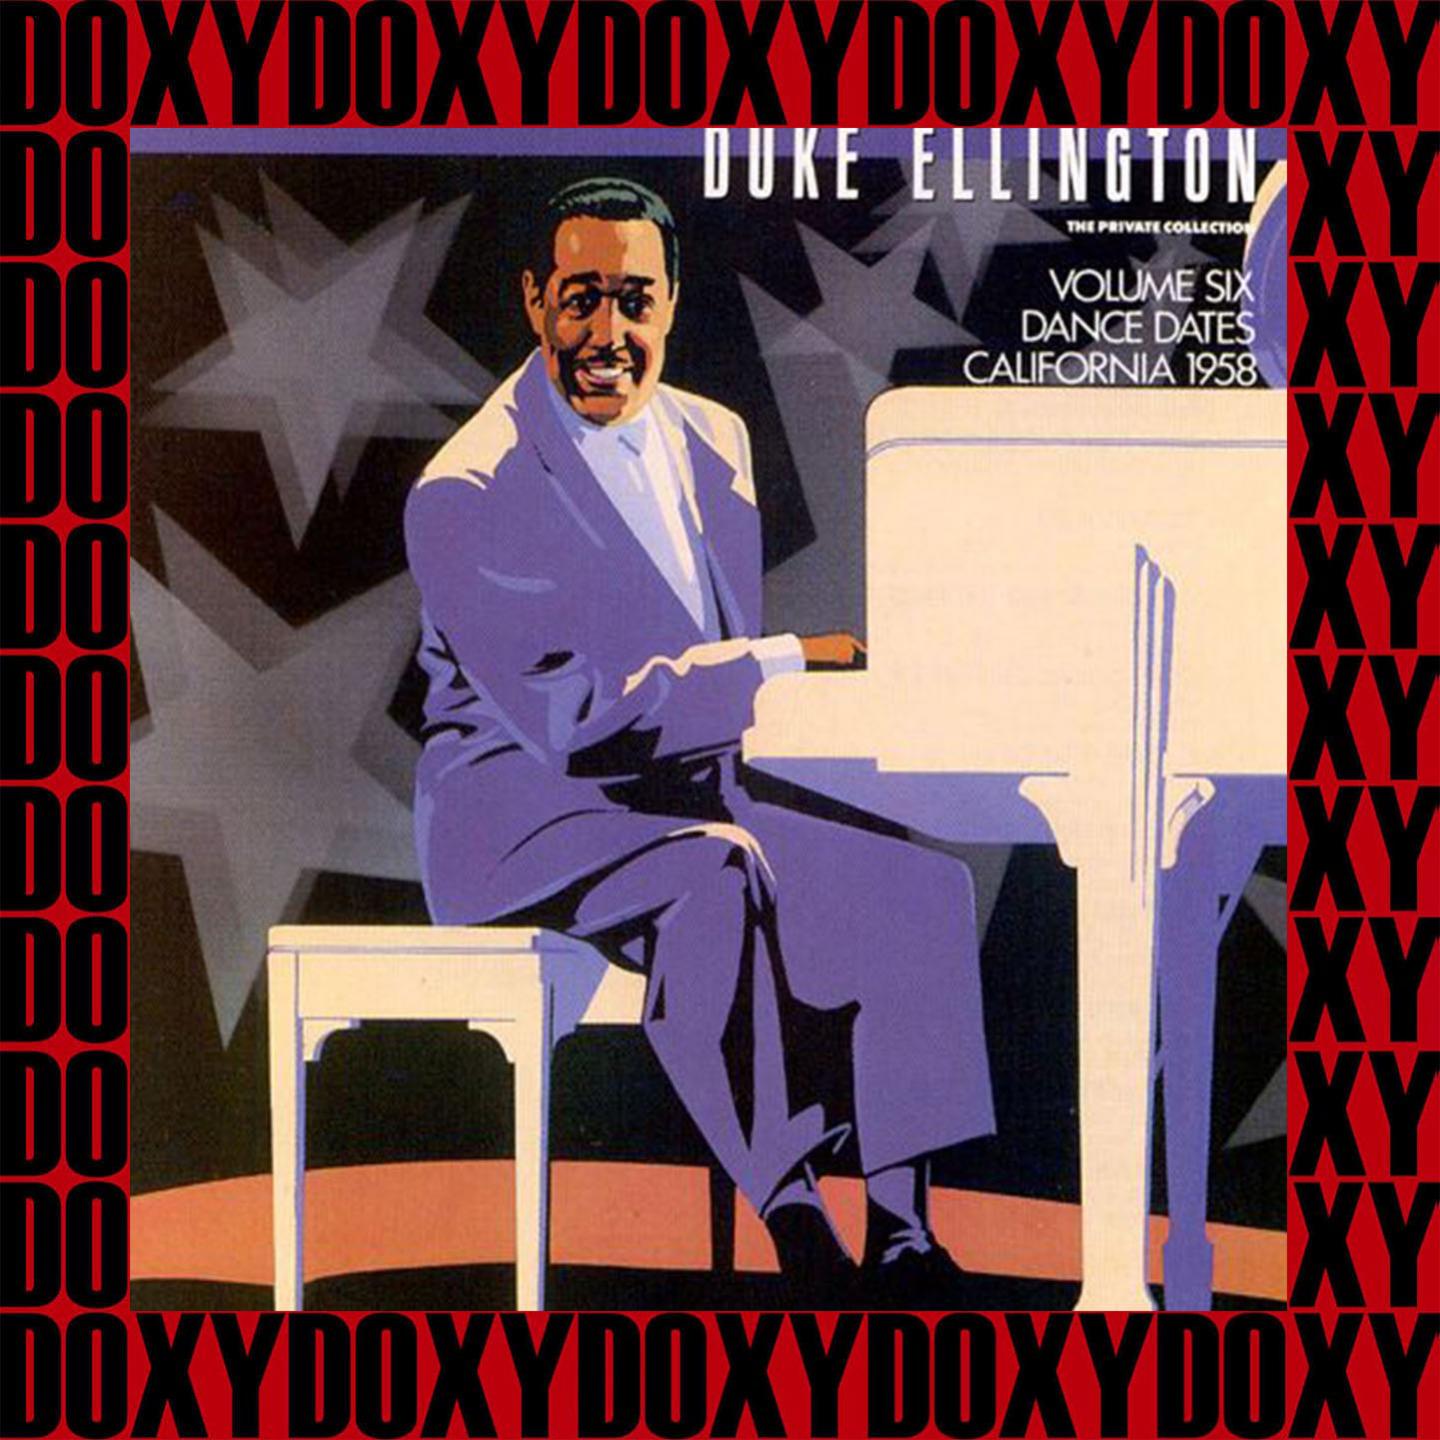 Duke Ellington Private Collection, - Vol. 6, Dance Dates, California 1958 (Remastered Version) (Doxy Collection)